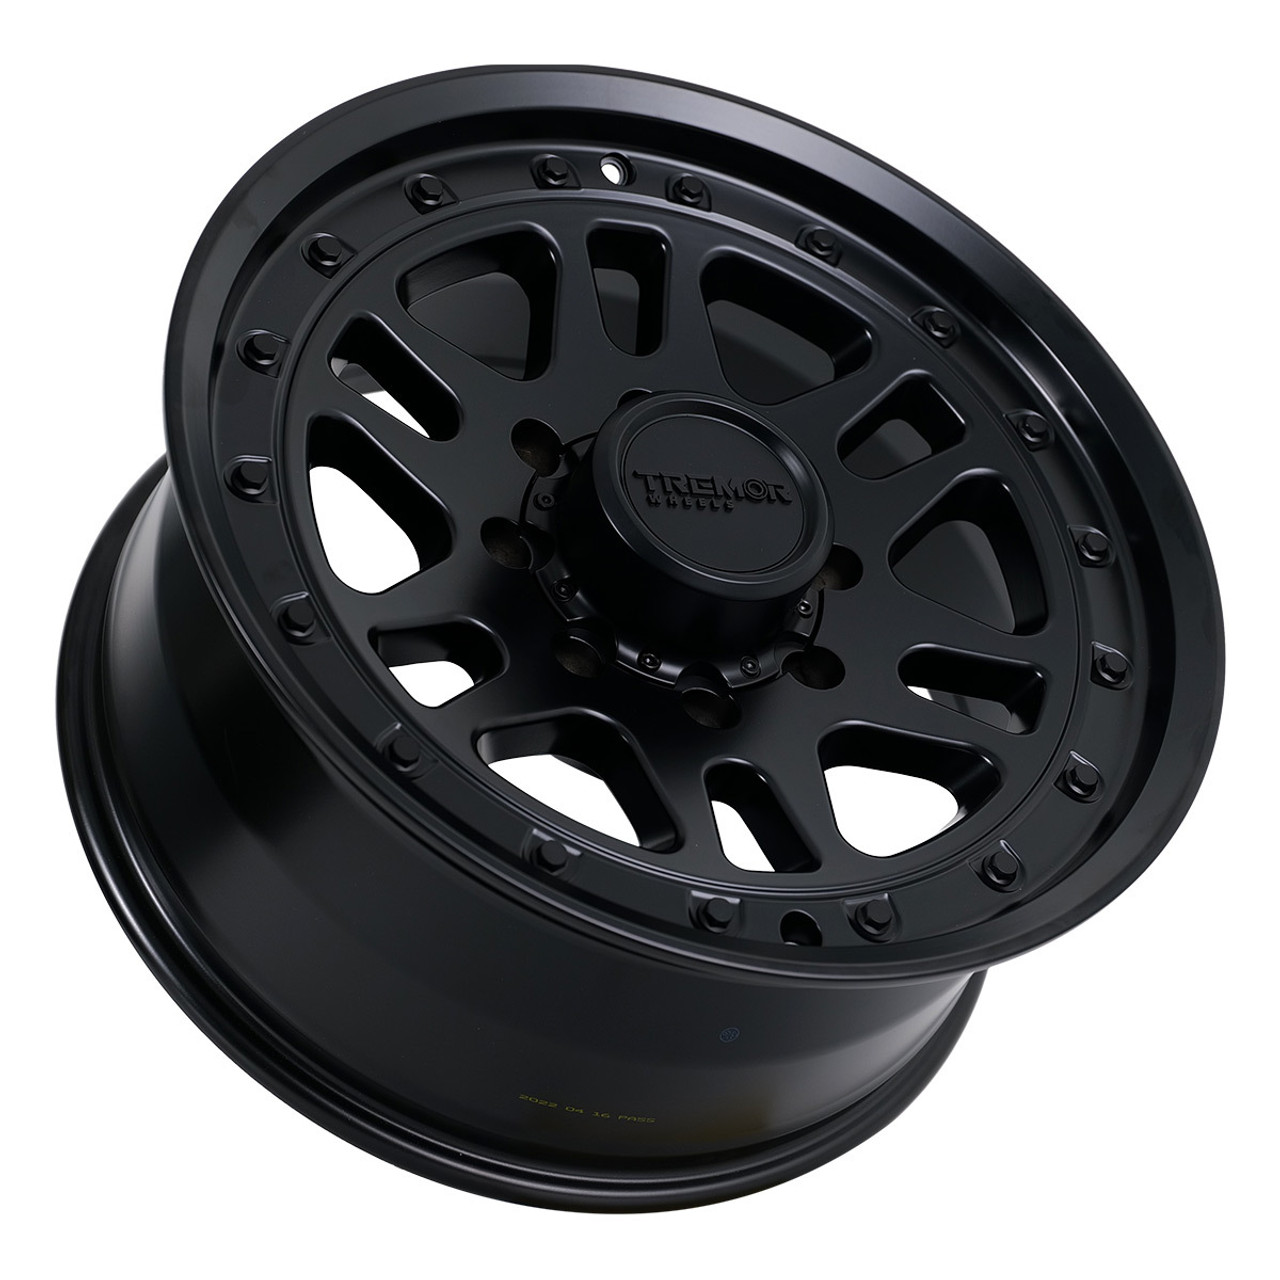 20" Tremor 105 Shaker Satin Black Wheel 20x9 5x150 0mm For Toyota Truck Suv Rim